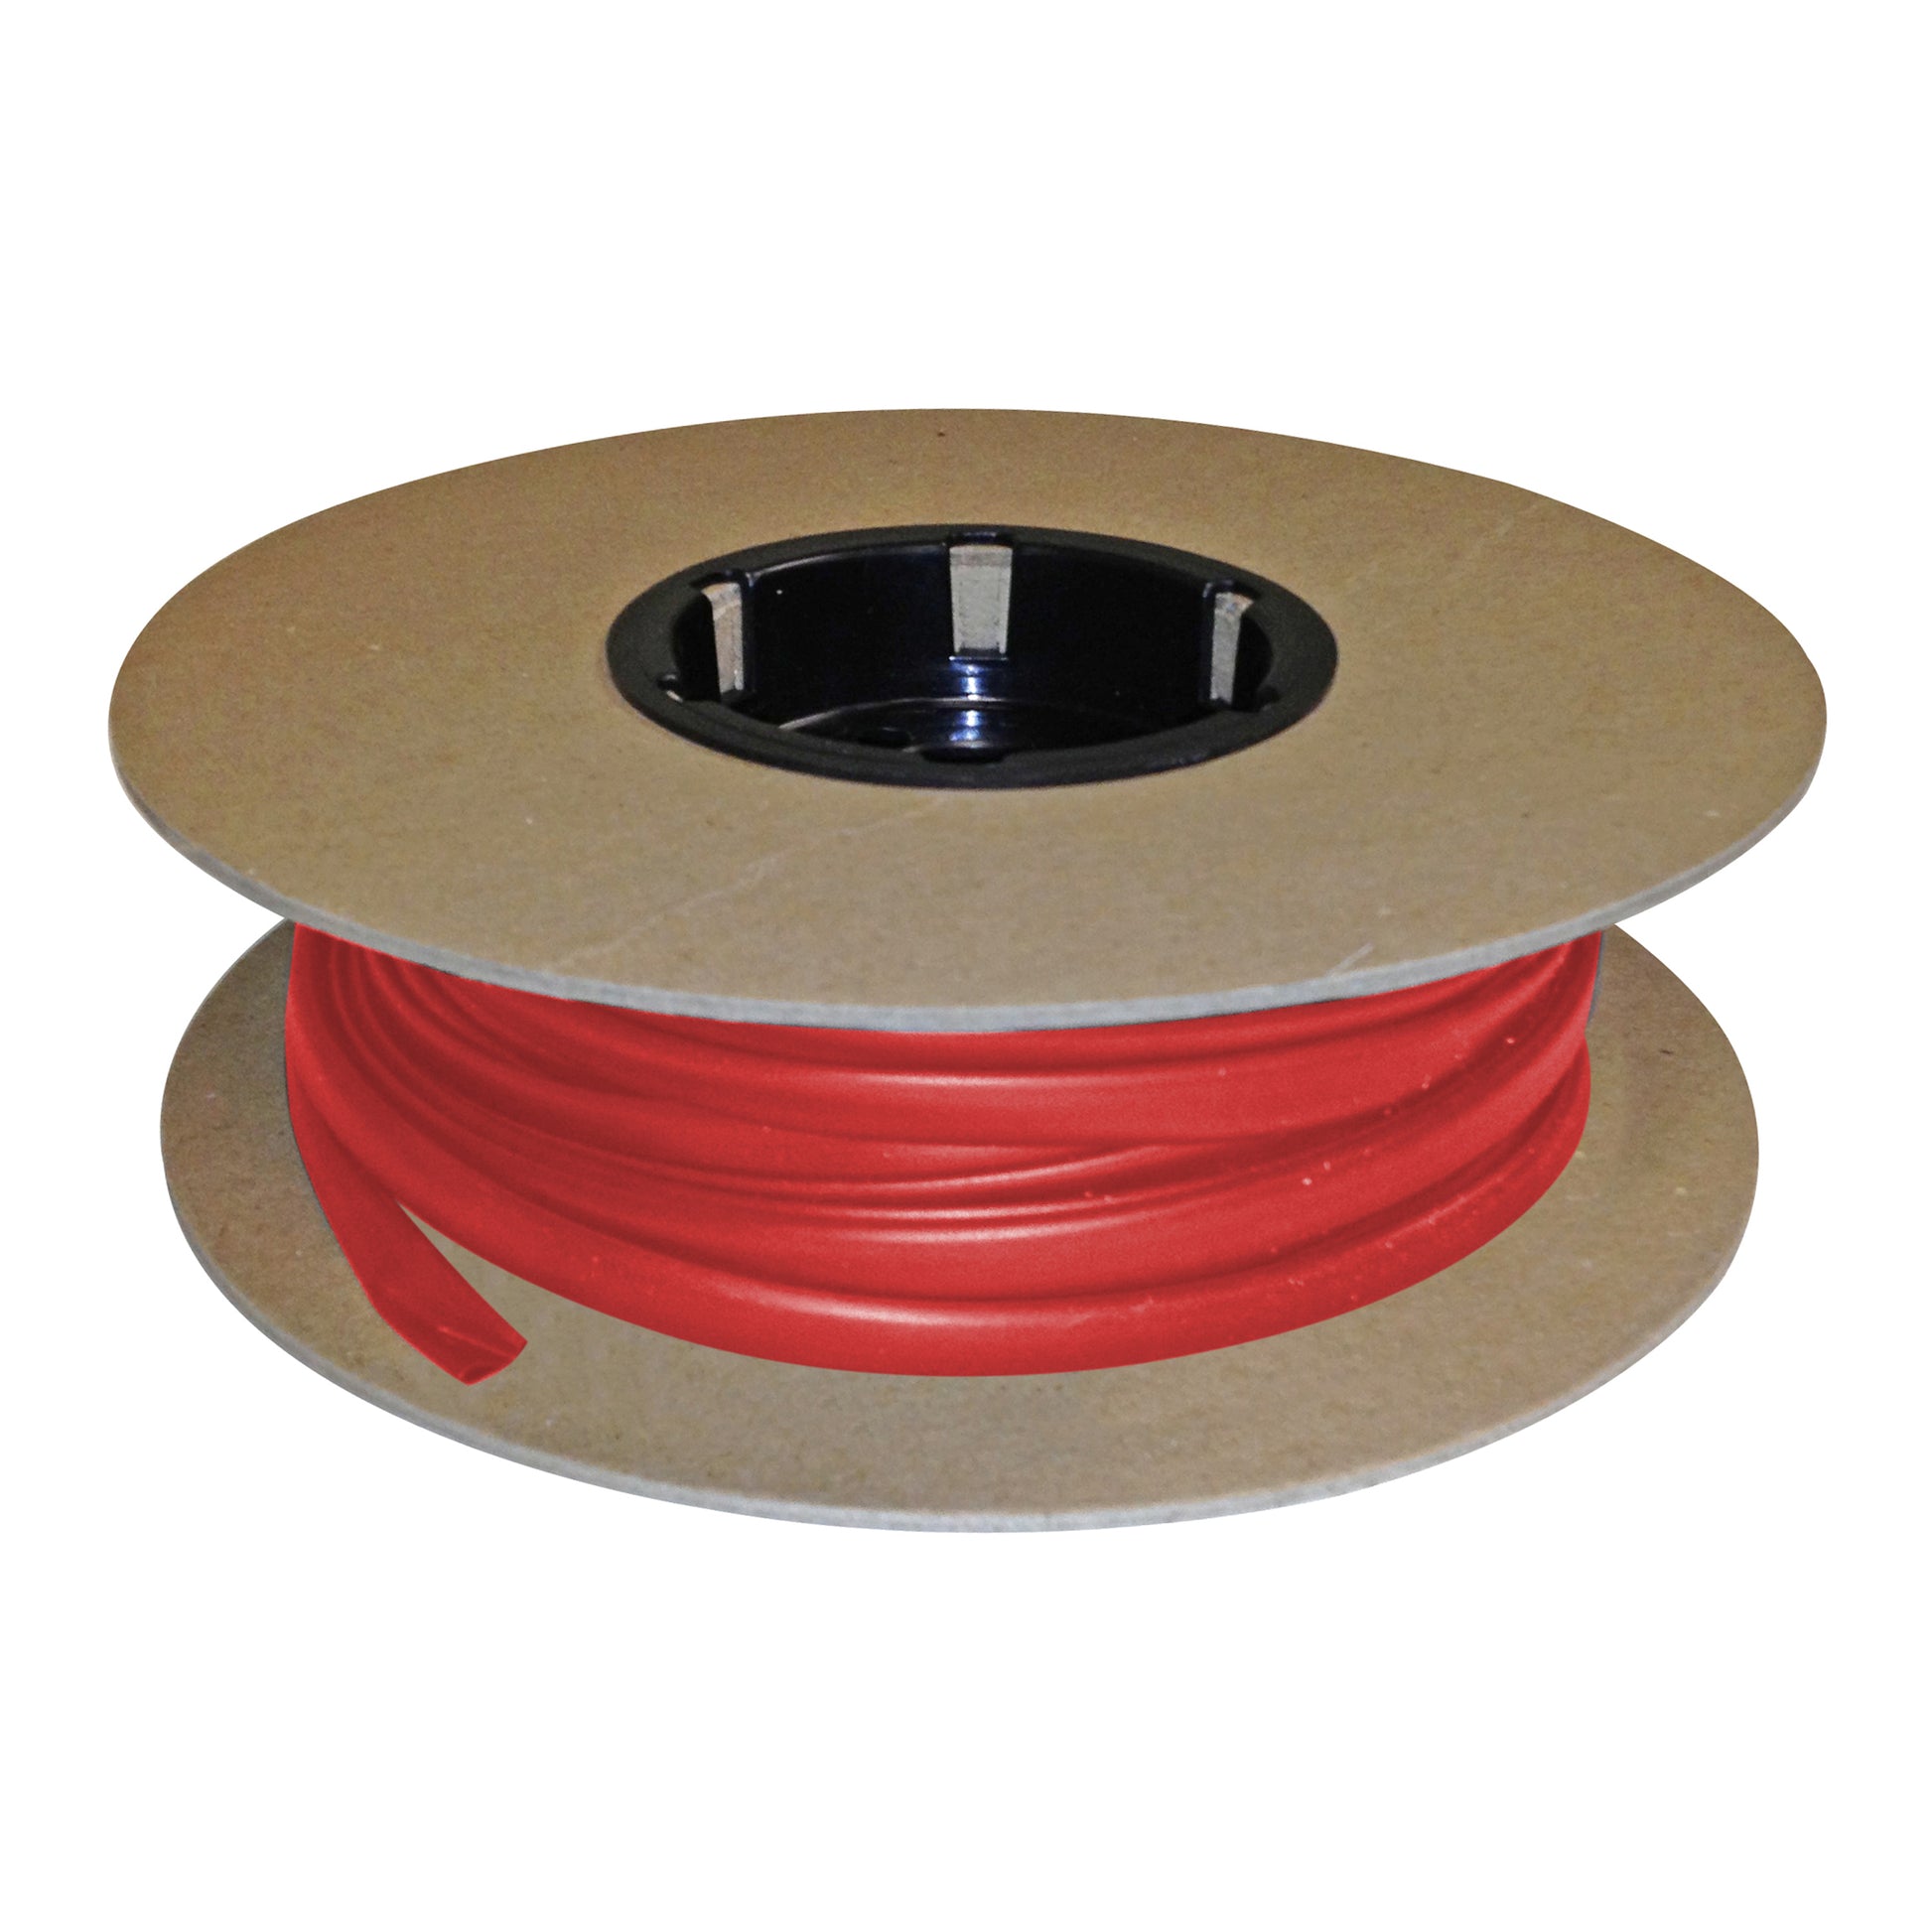 Flexible Thin Single Wall Non-Adhesive Heat Shrink Tubing 2:1 Red 3/16" ID - 100' Ft Spool